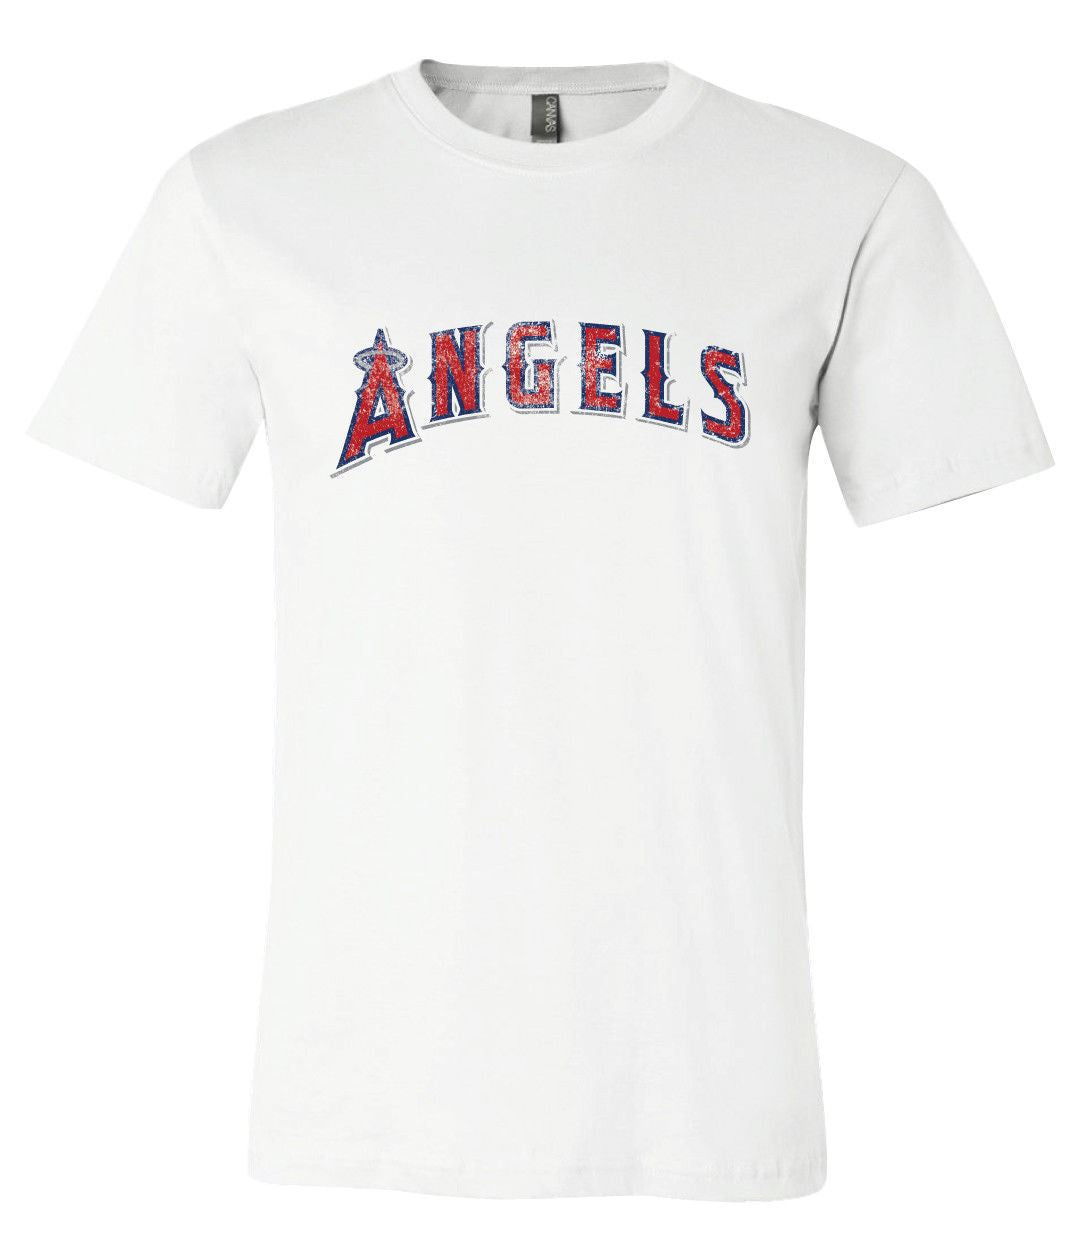 LOS ANGELES ANGELS T-SHIRT